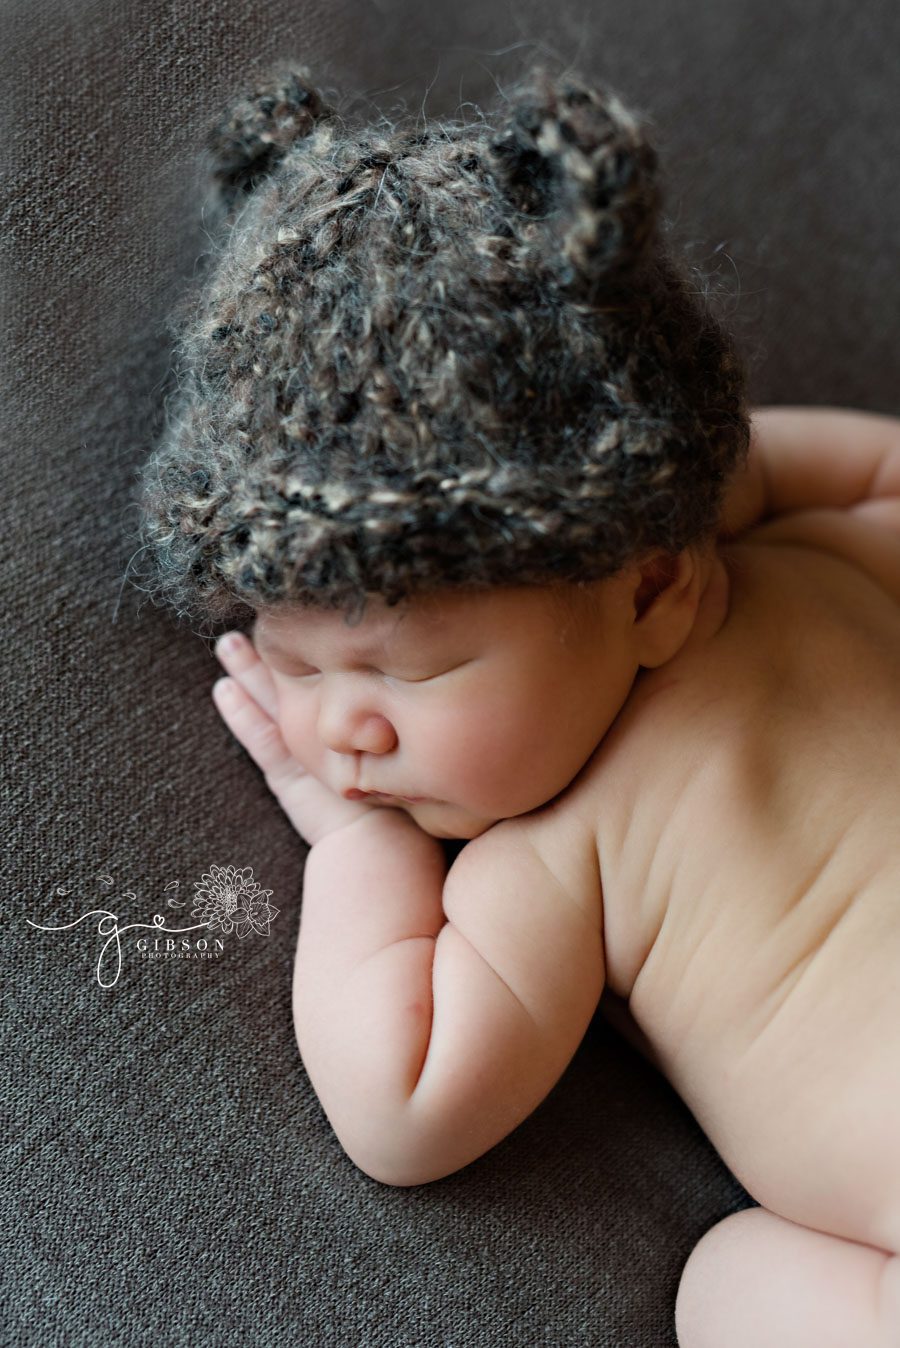 Newborn Photographer Toronto